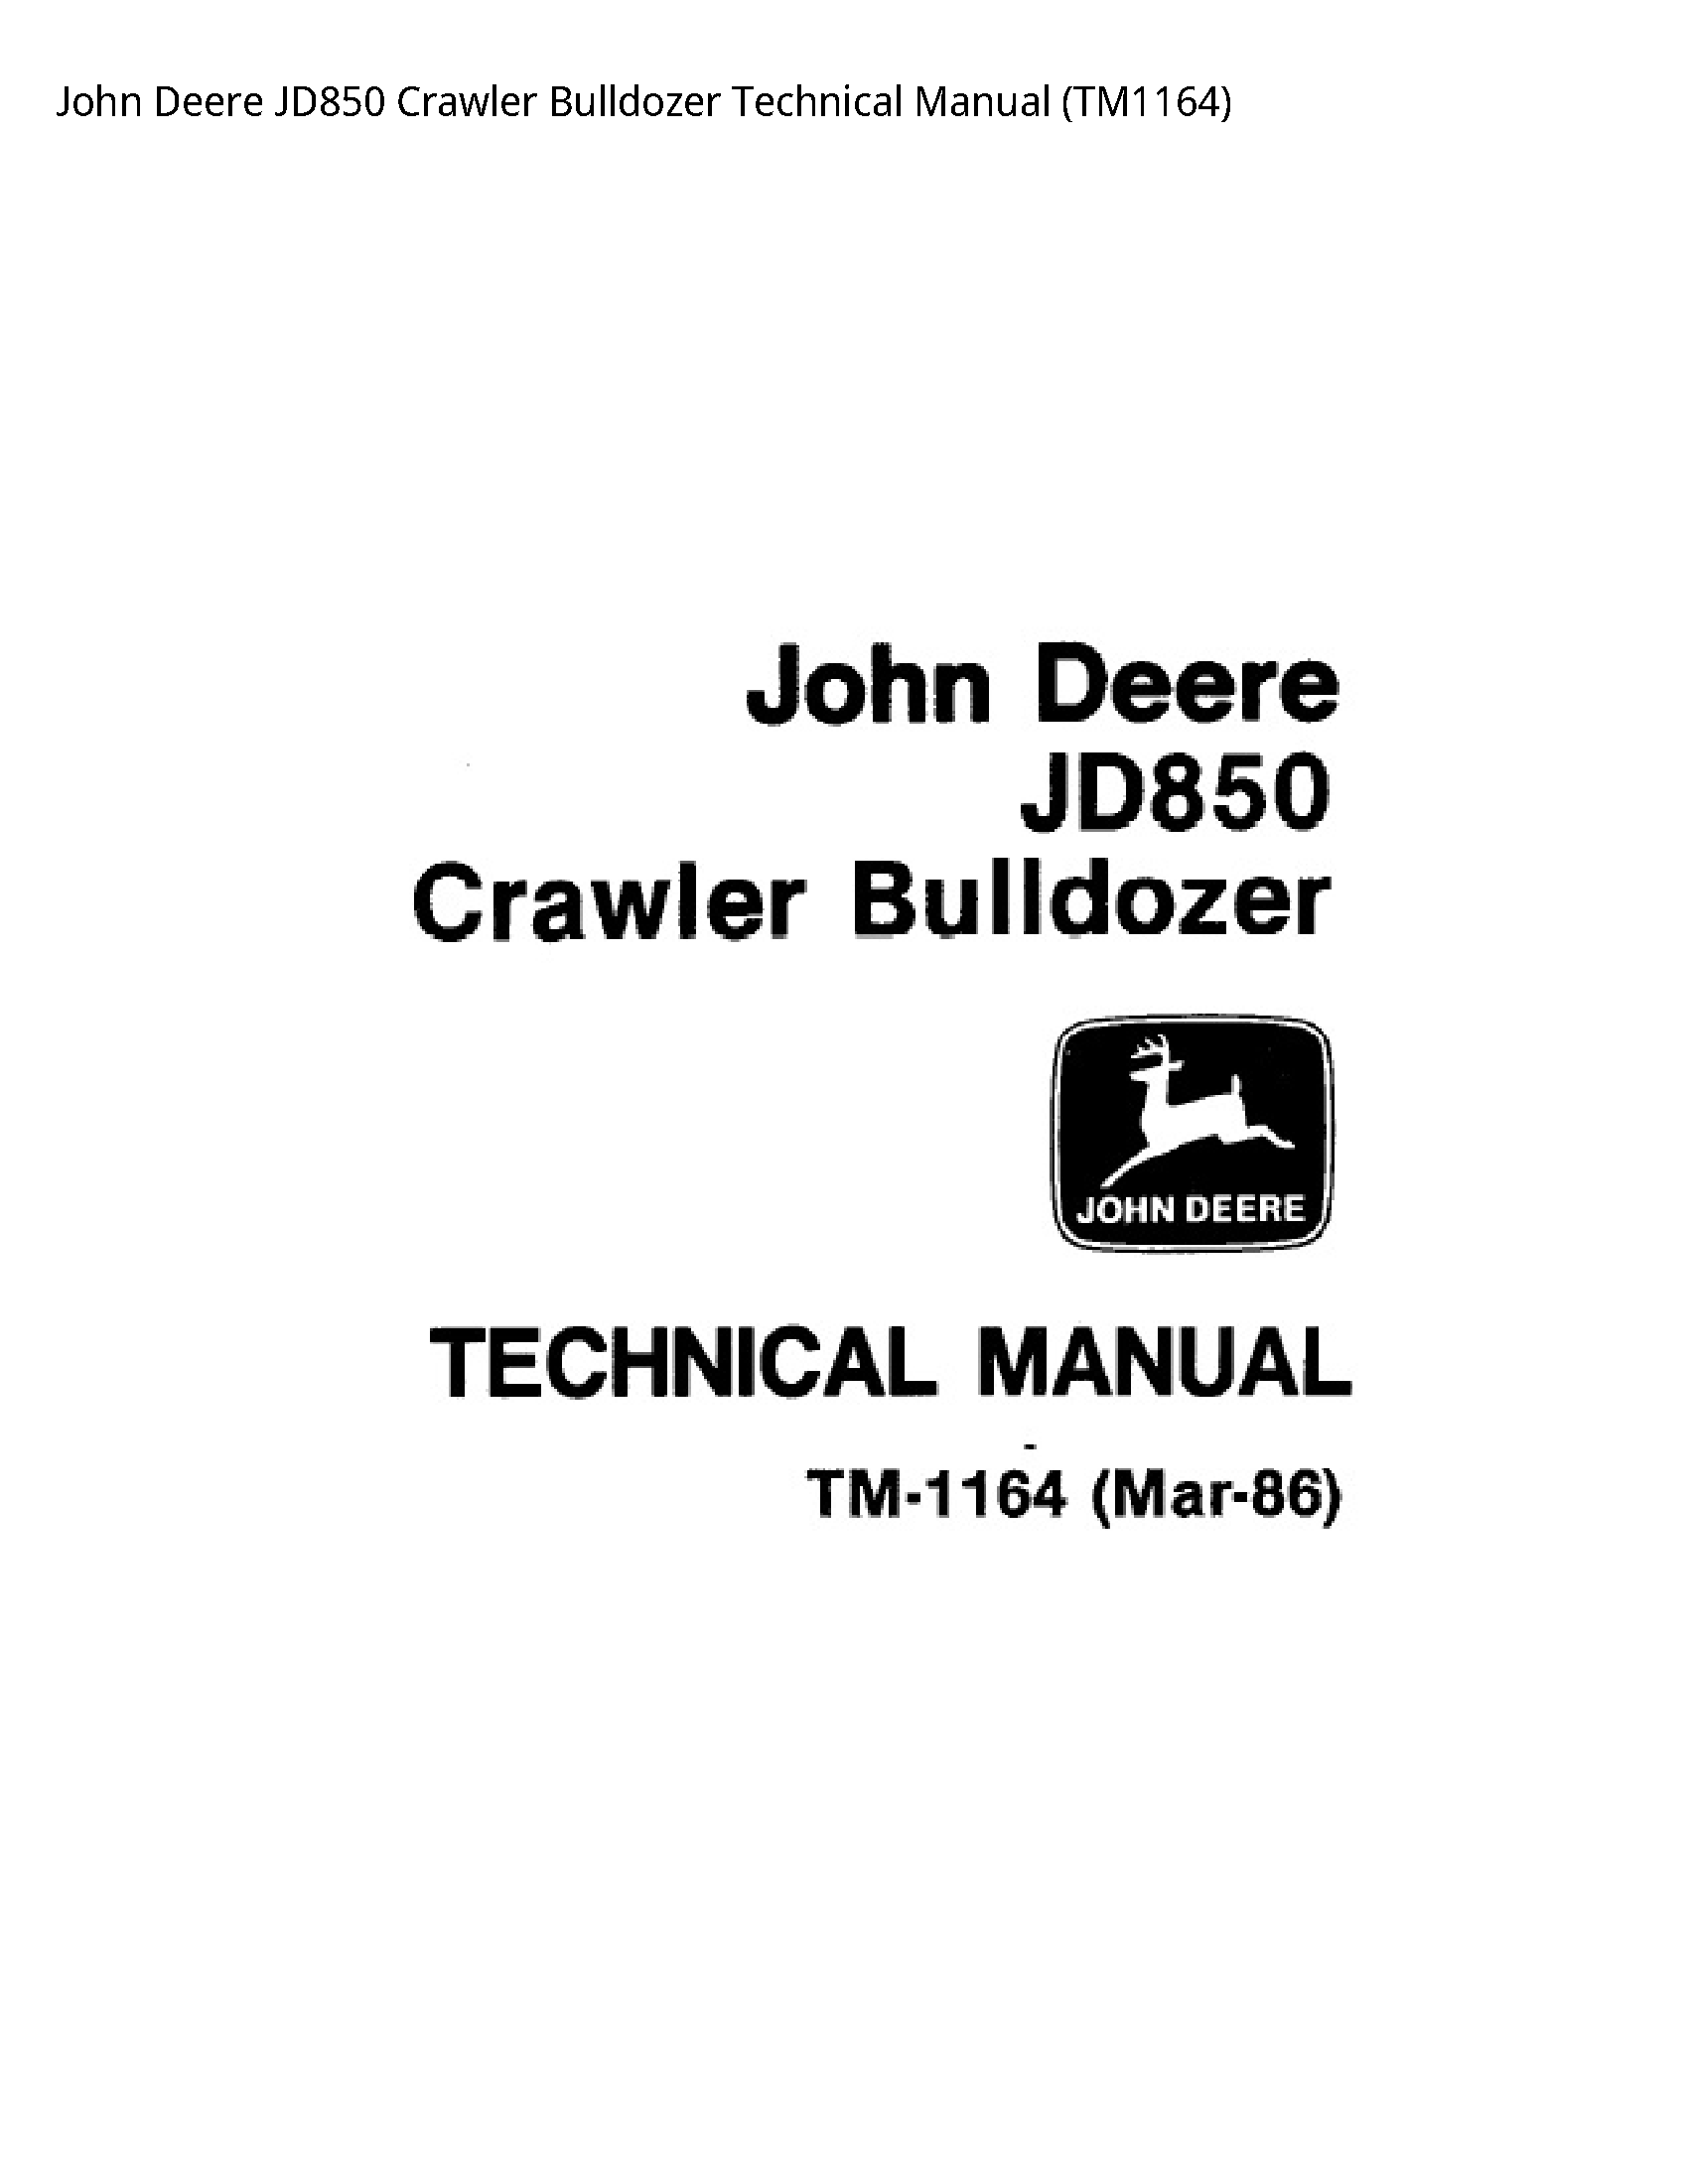 John Deere JD850 Crawler Bulldozer Technical manual